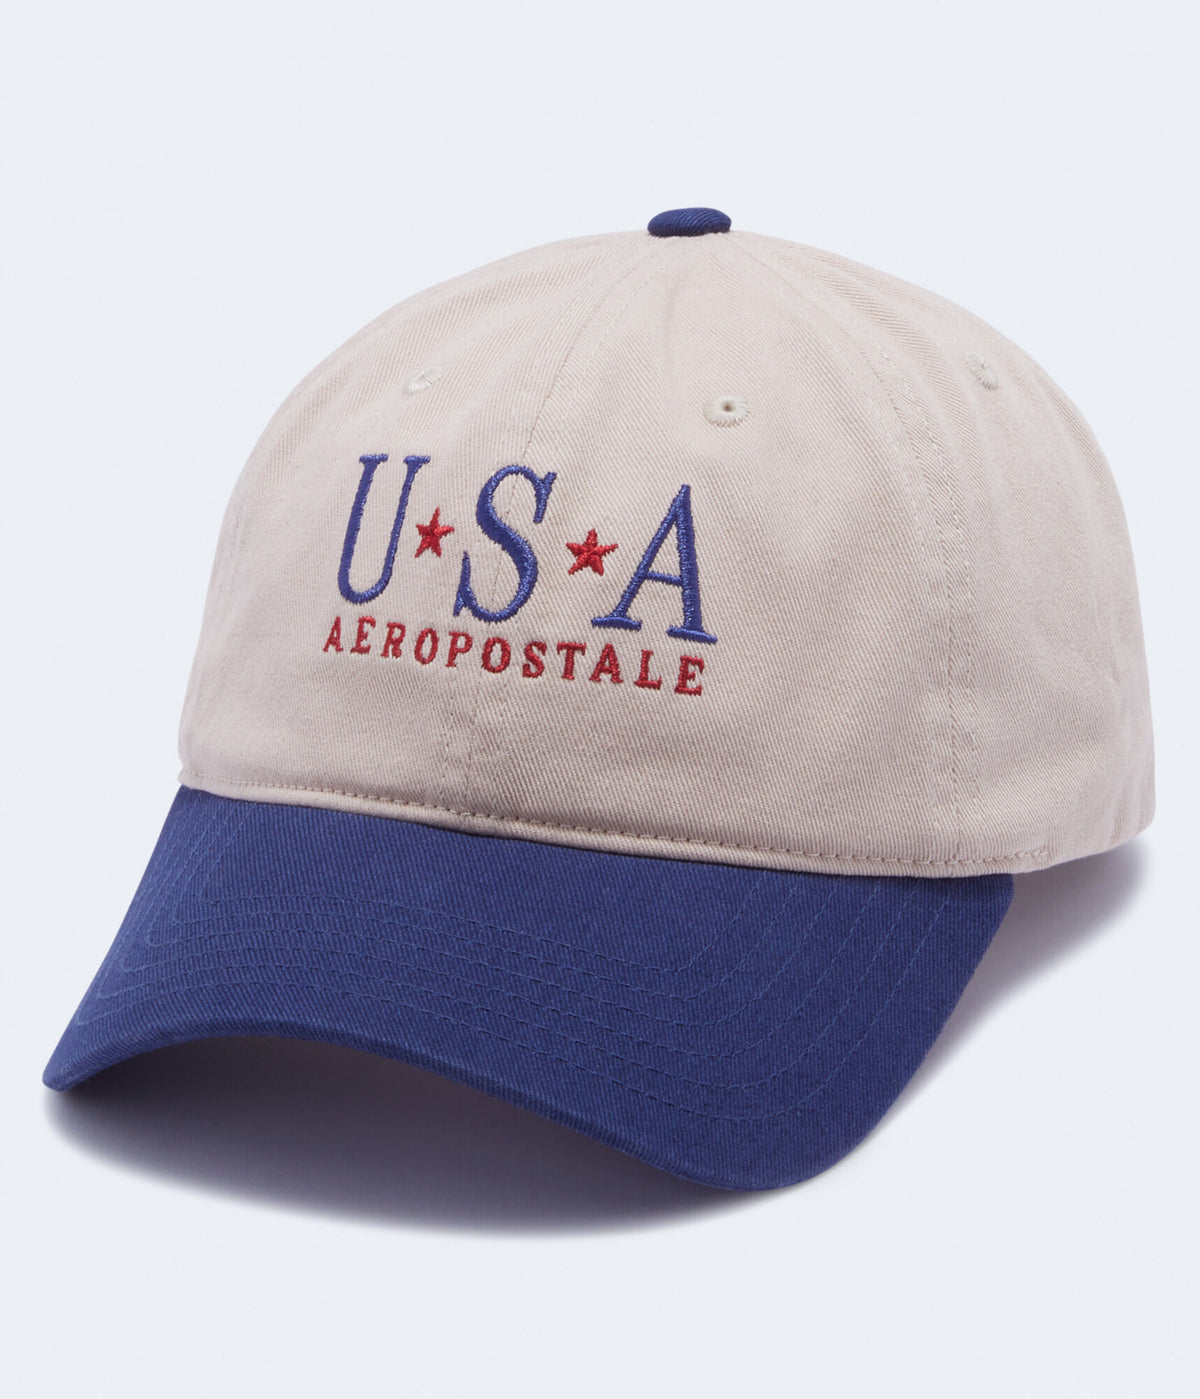 Aeropostale Mens' Aeropostale USA Adjustable Dad Hat - Navy Blue - Size One Size - Cotton - Teen Fashion & Clothing Cadet Navy